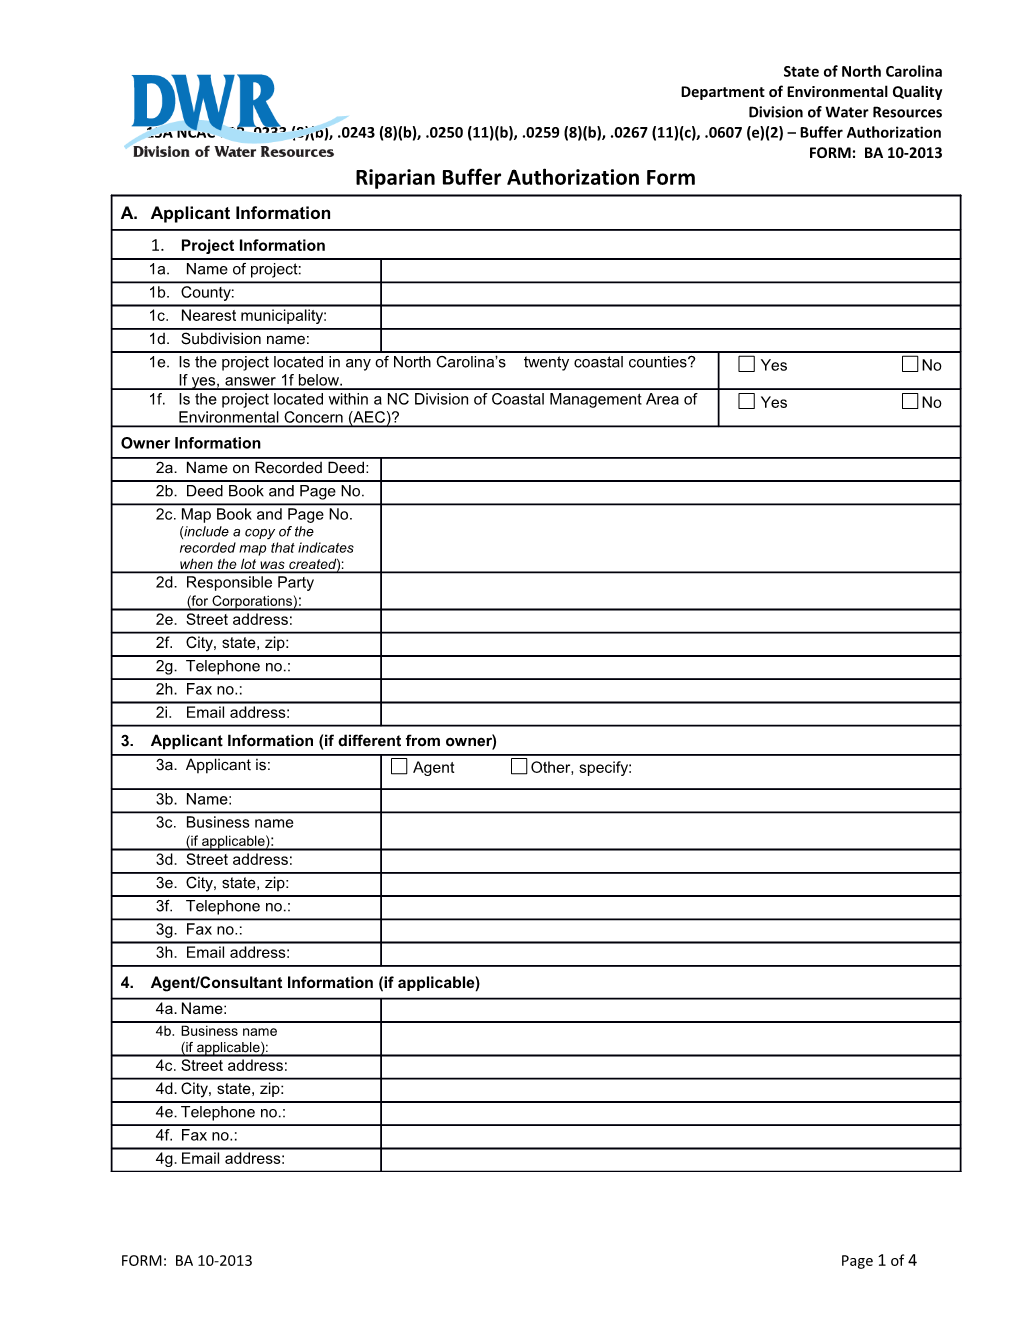 Riparian Buffer Authorization Form